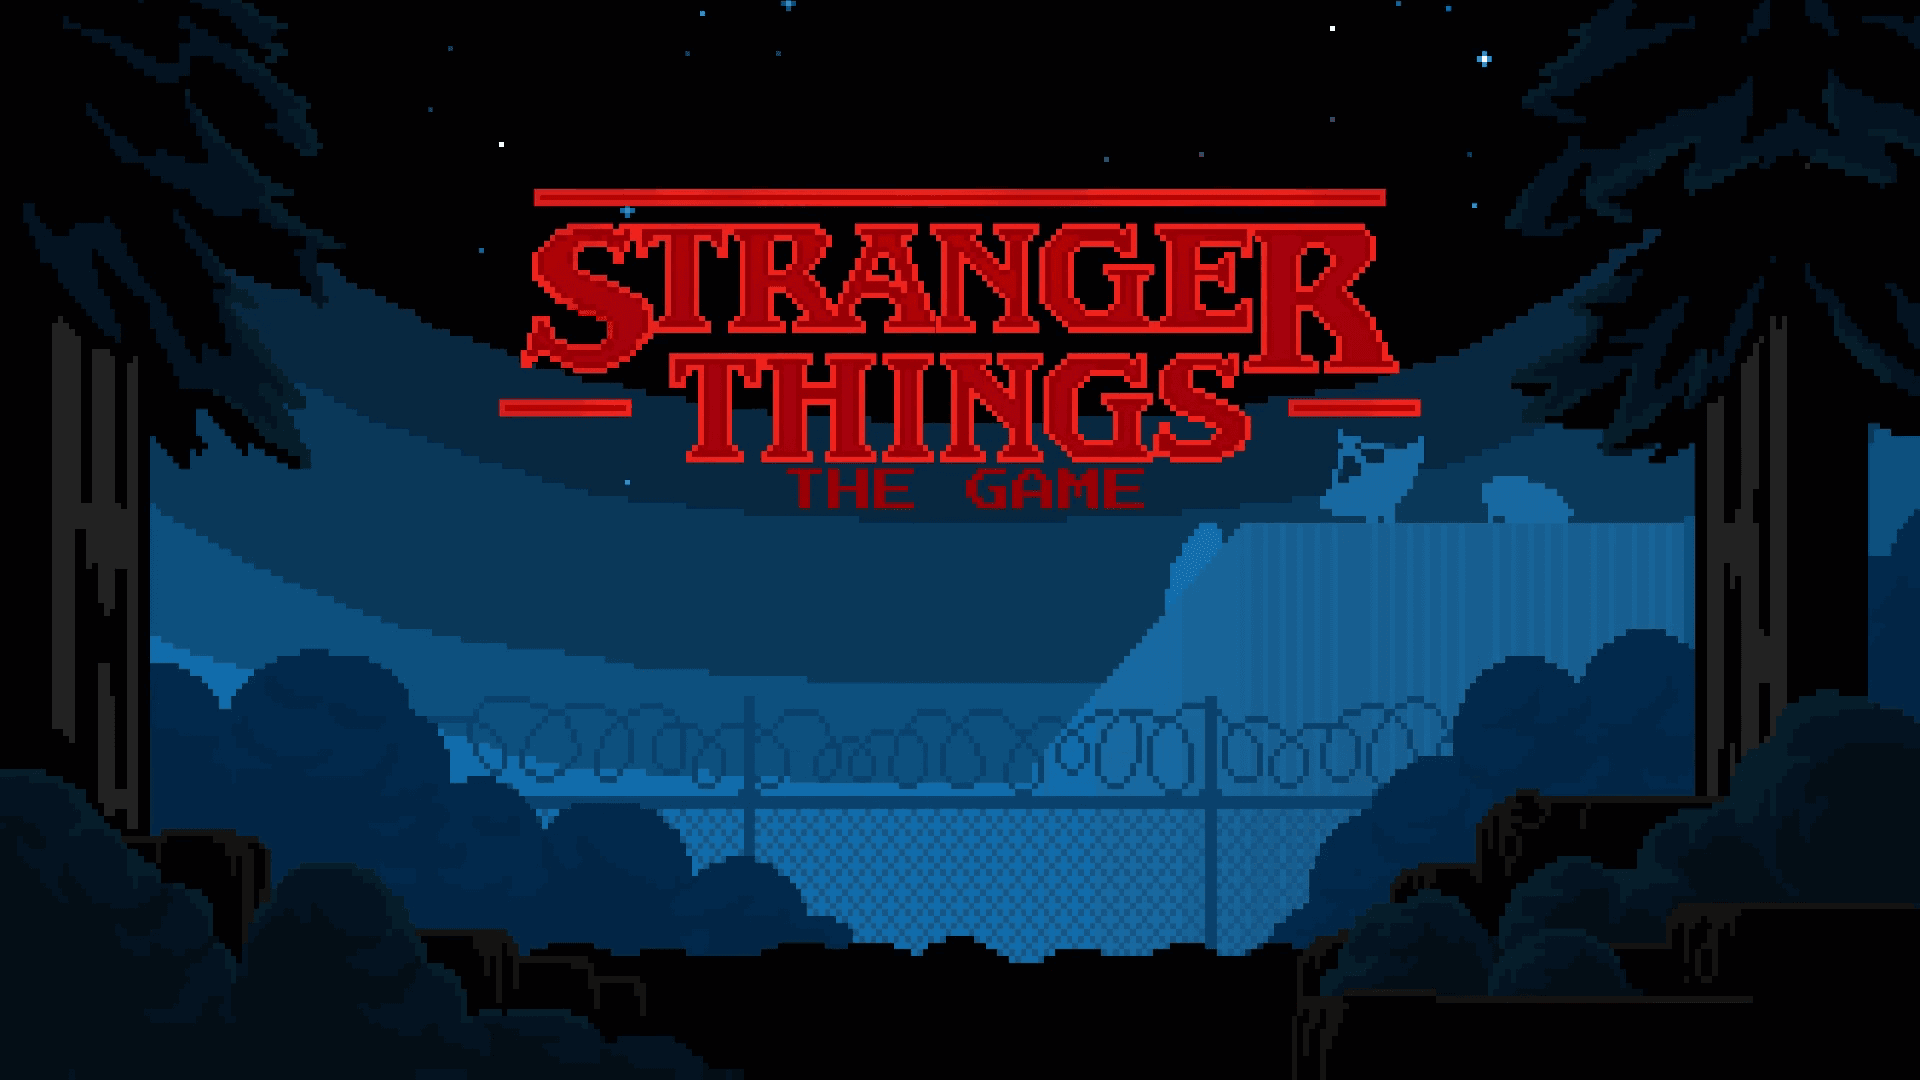 Stranger Things 3 The Game Nintendo Switch Version Full Game Free Download 2019